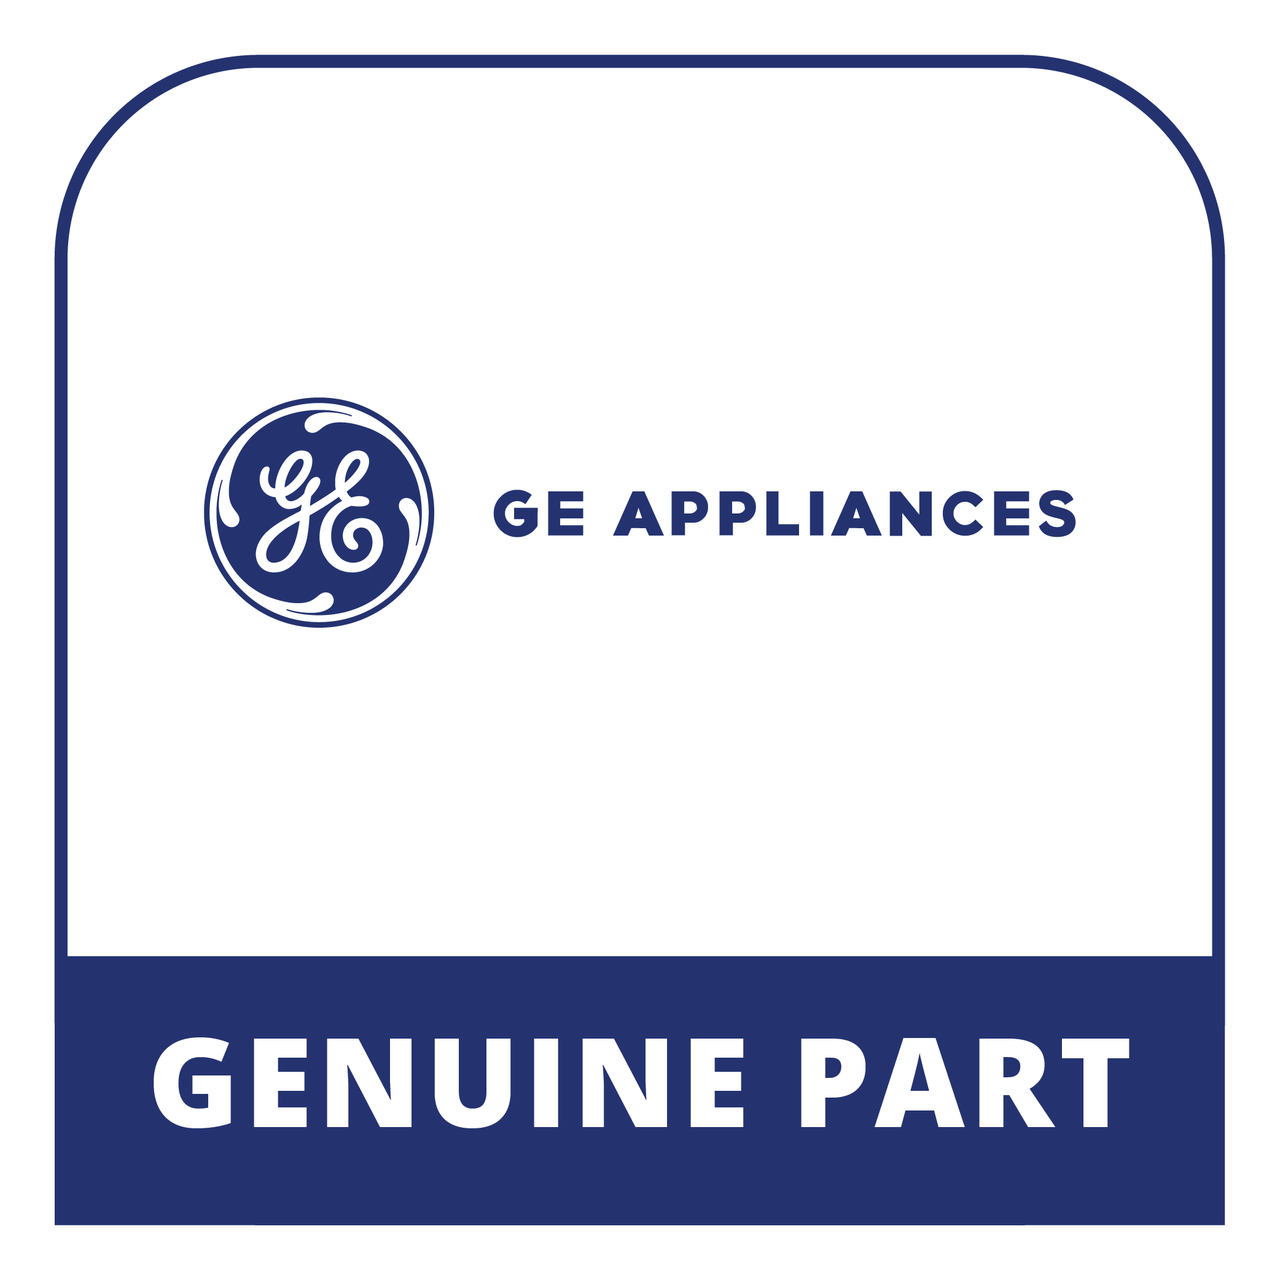 GE Appliances WR01X43635 - Motor Grommet Cover - Genuine GE Appliances Part